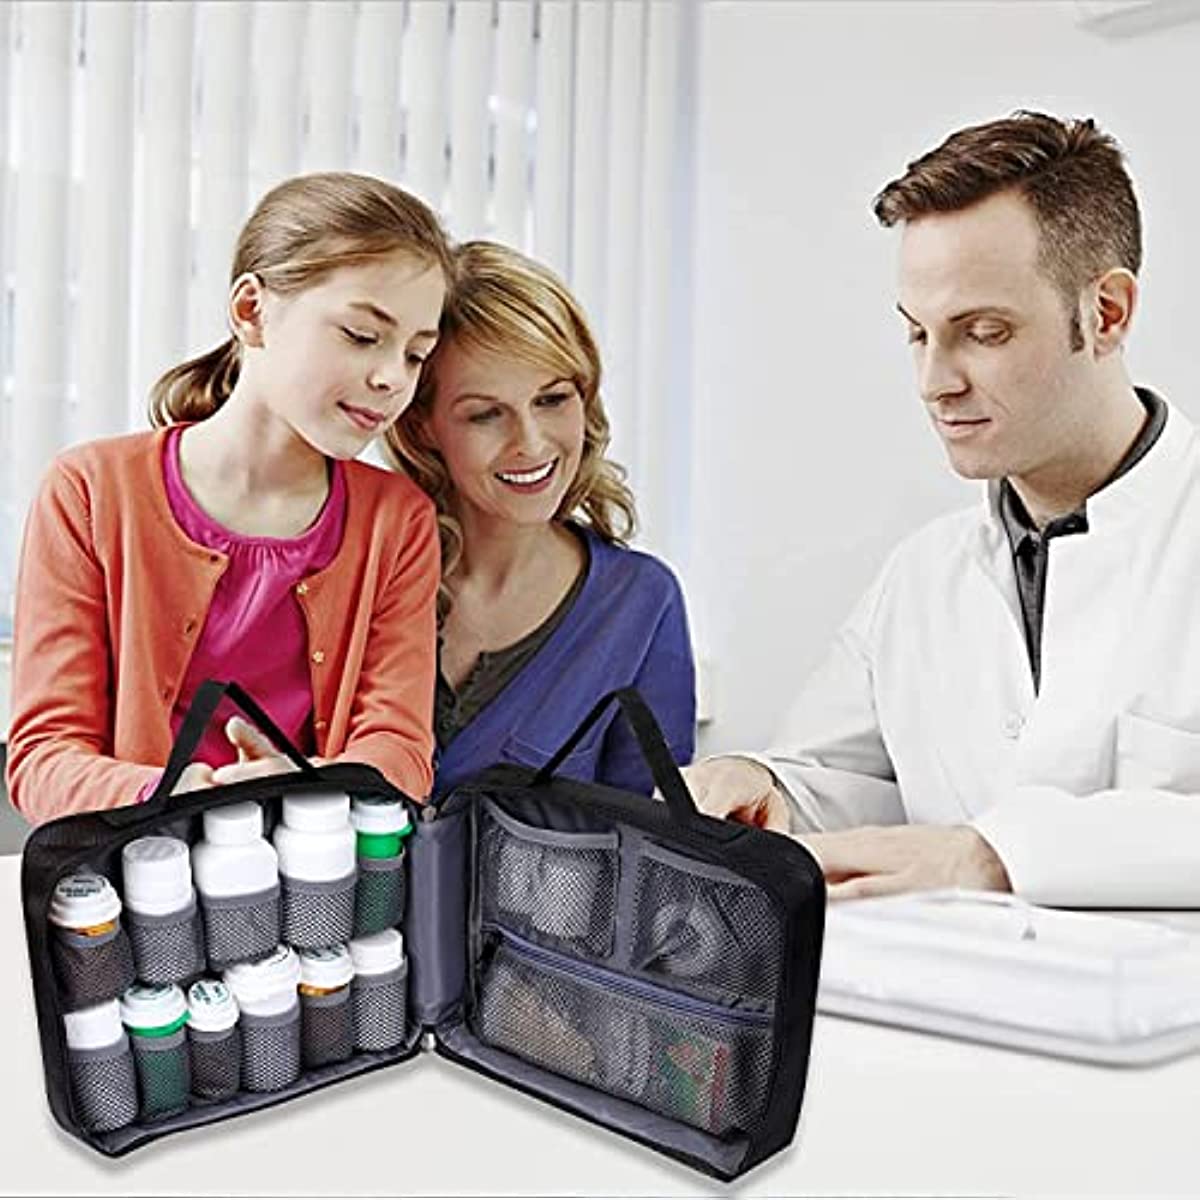 Pill Bottle Organizer, Medicine Bag Storage Medication Pill Box Case with Handle & Fixed Pockets, Travel Medicine Storage Box Bag for Vitamins, Medications, Medical Supplies, Large, Black